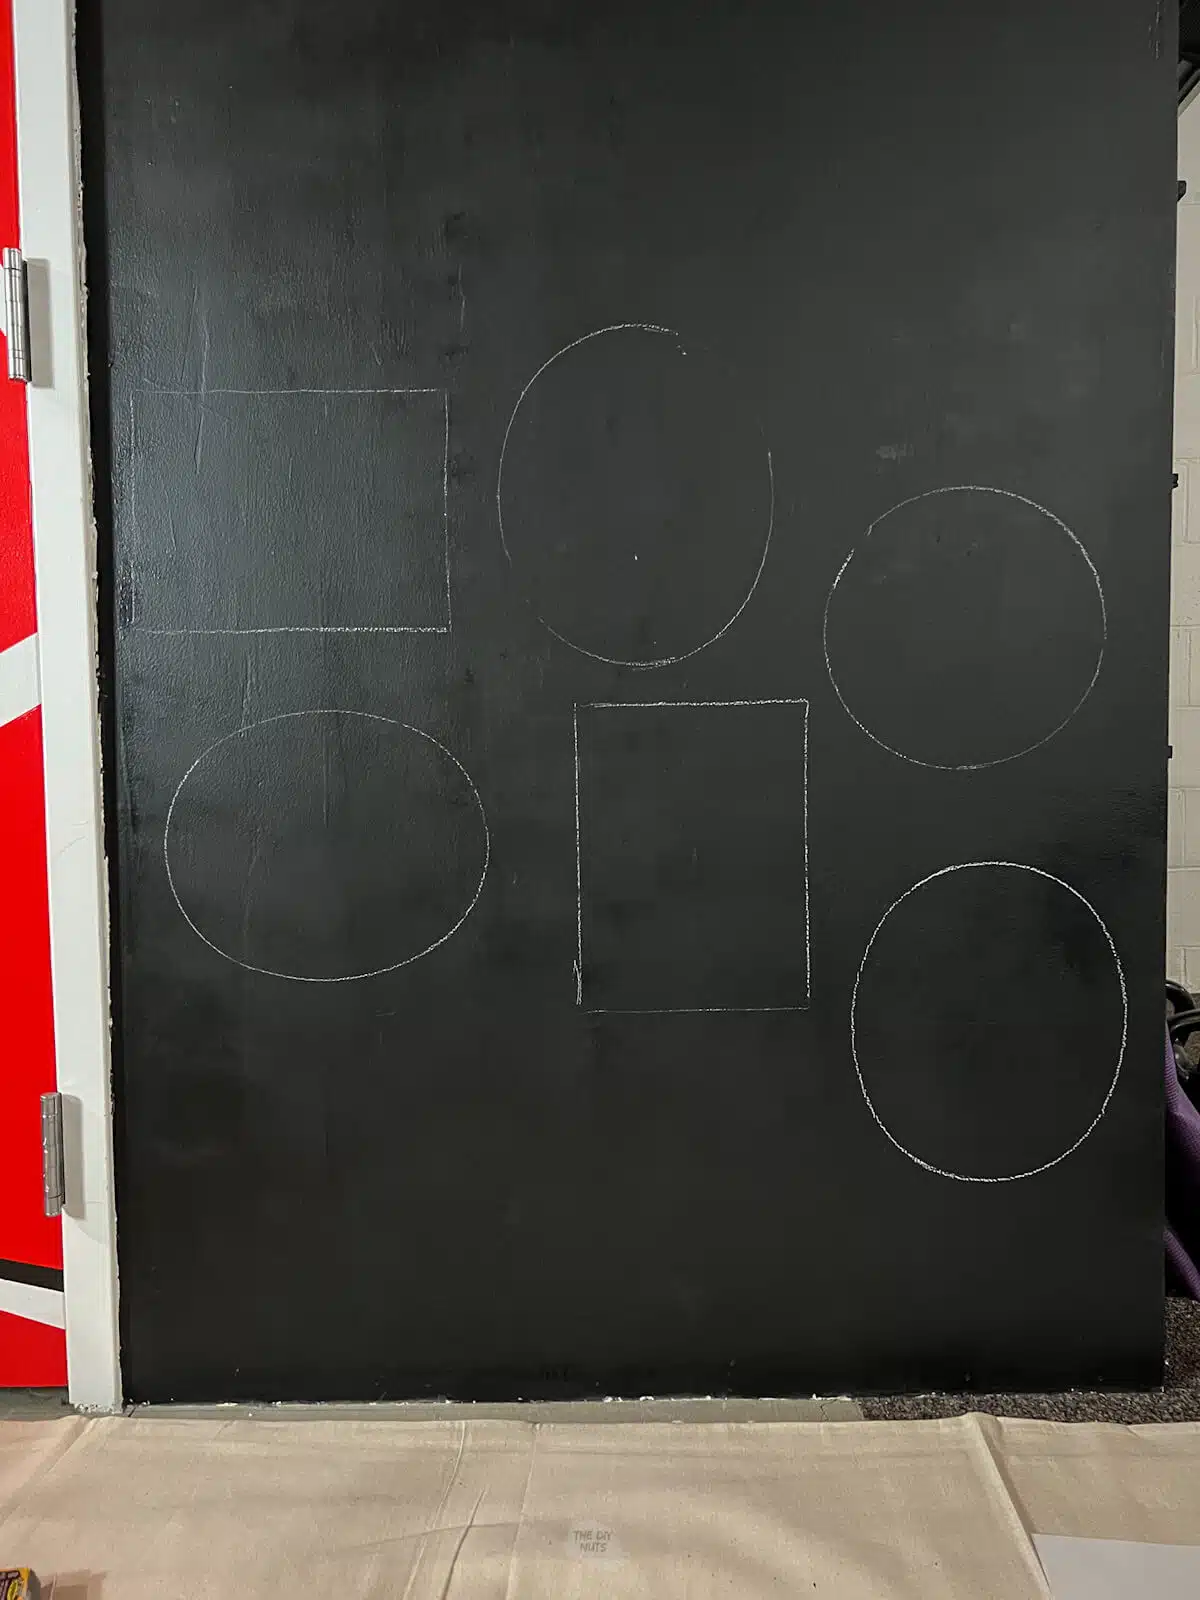 white chalk shapes on chalkboard wall